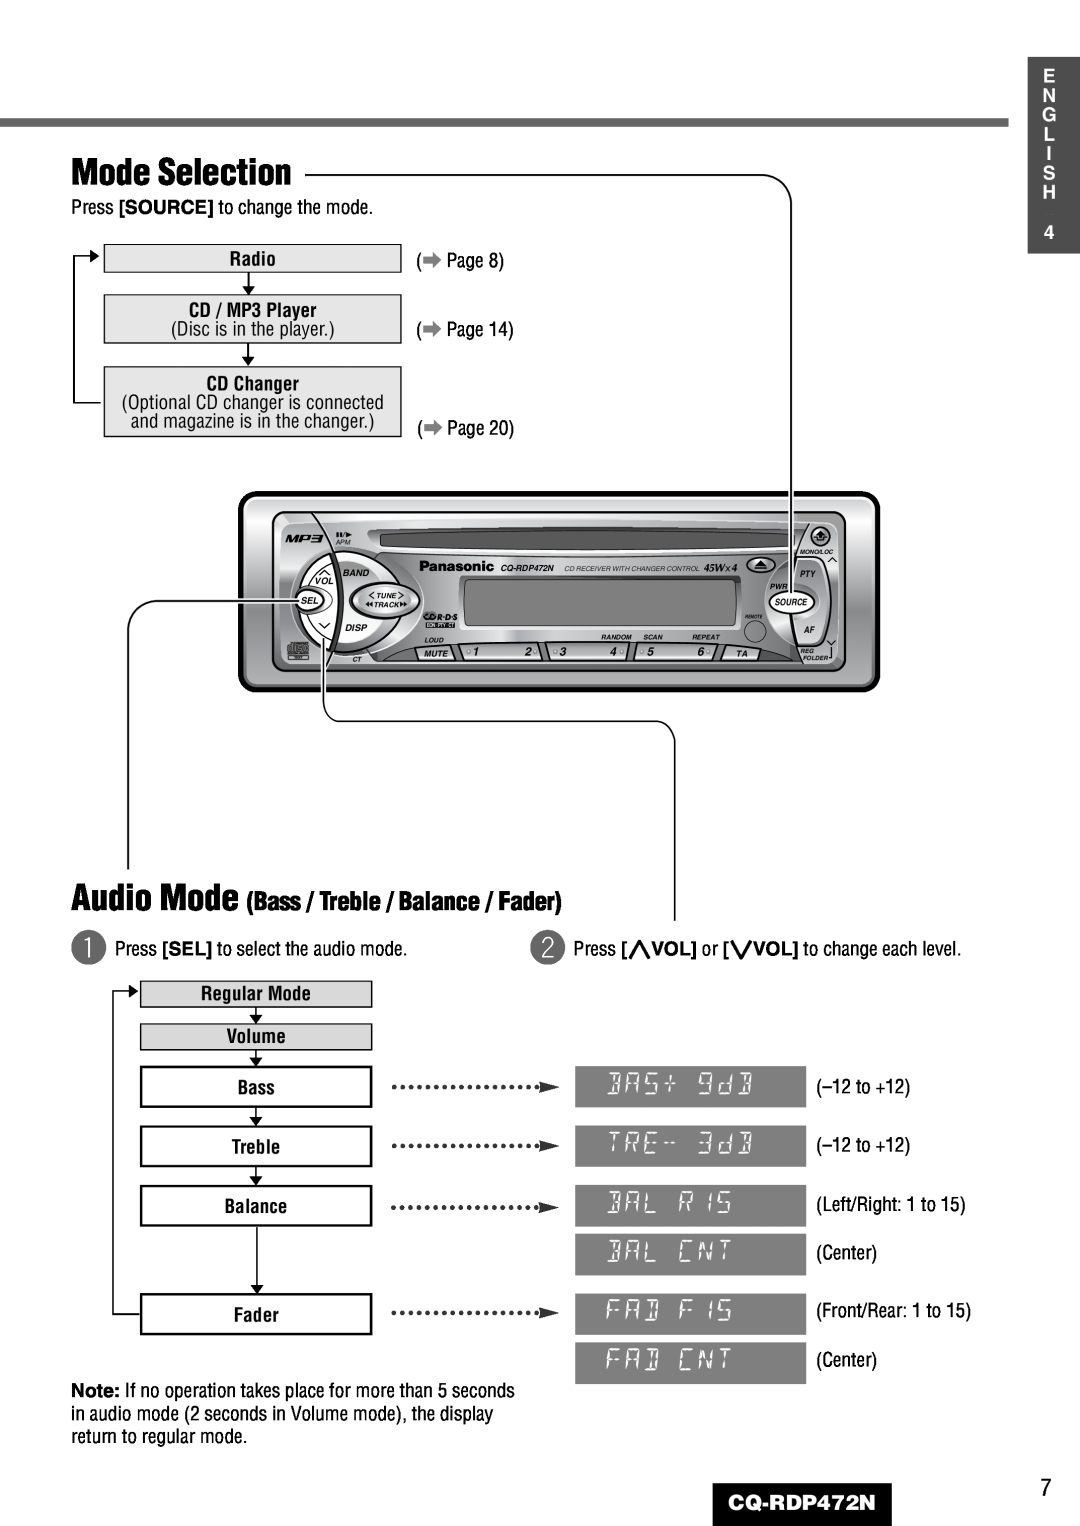 Panasonic CQ-RDP472N manual Mode Selection, BAS+ 9 dB¡ Rs, TRE- 3 dB¡ Rs, BAL R15 ¡Rs, BAL CNT ¡ Rs, 12to +12, Center 